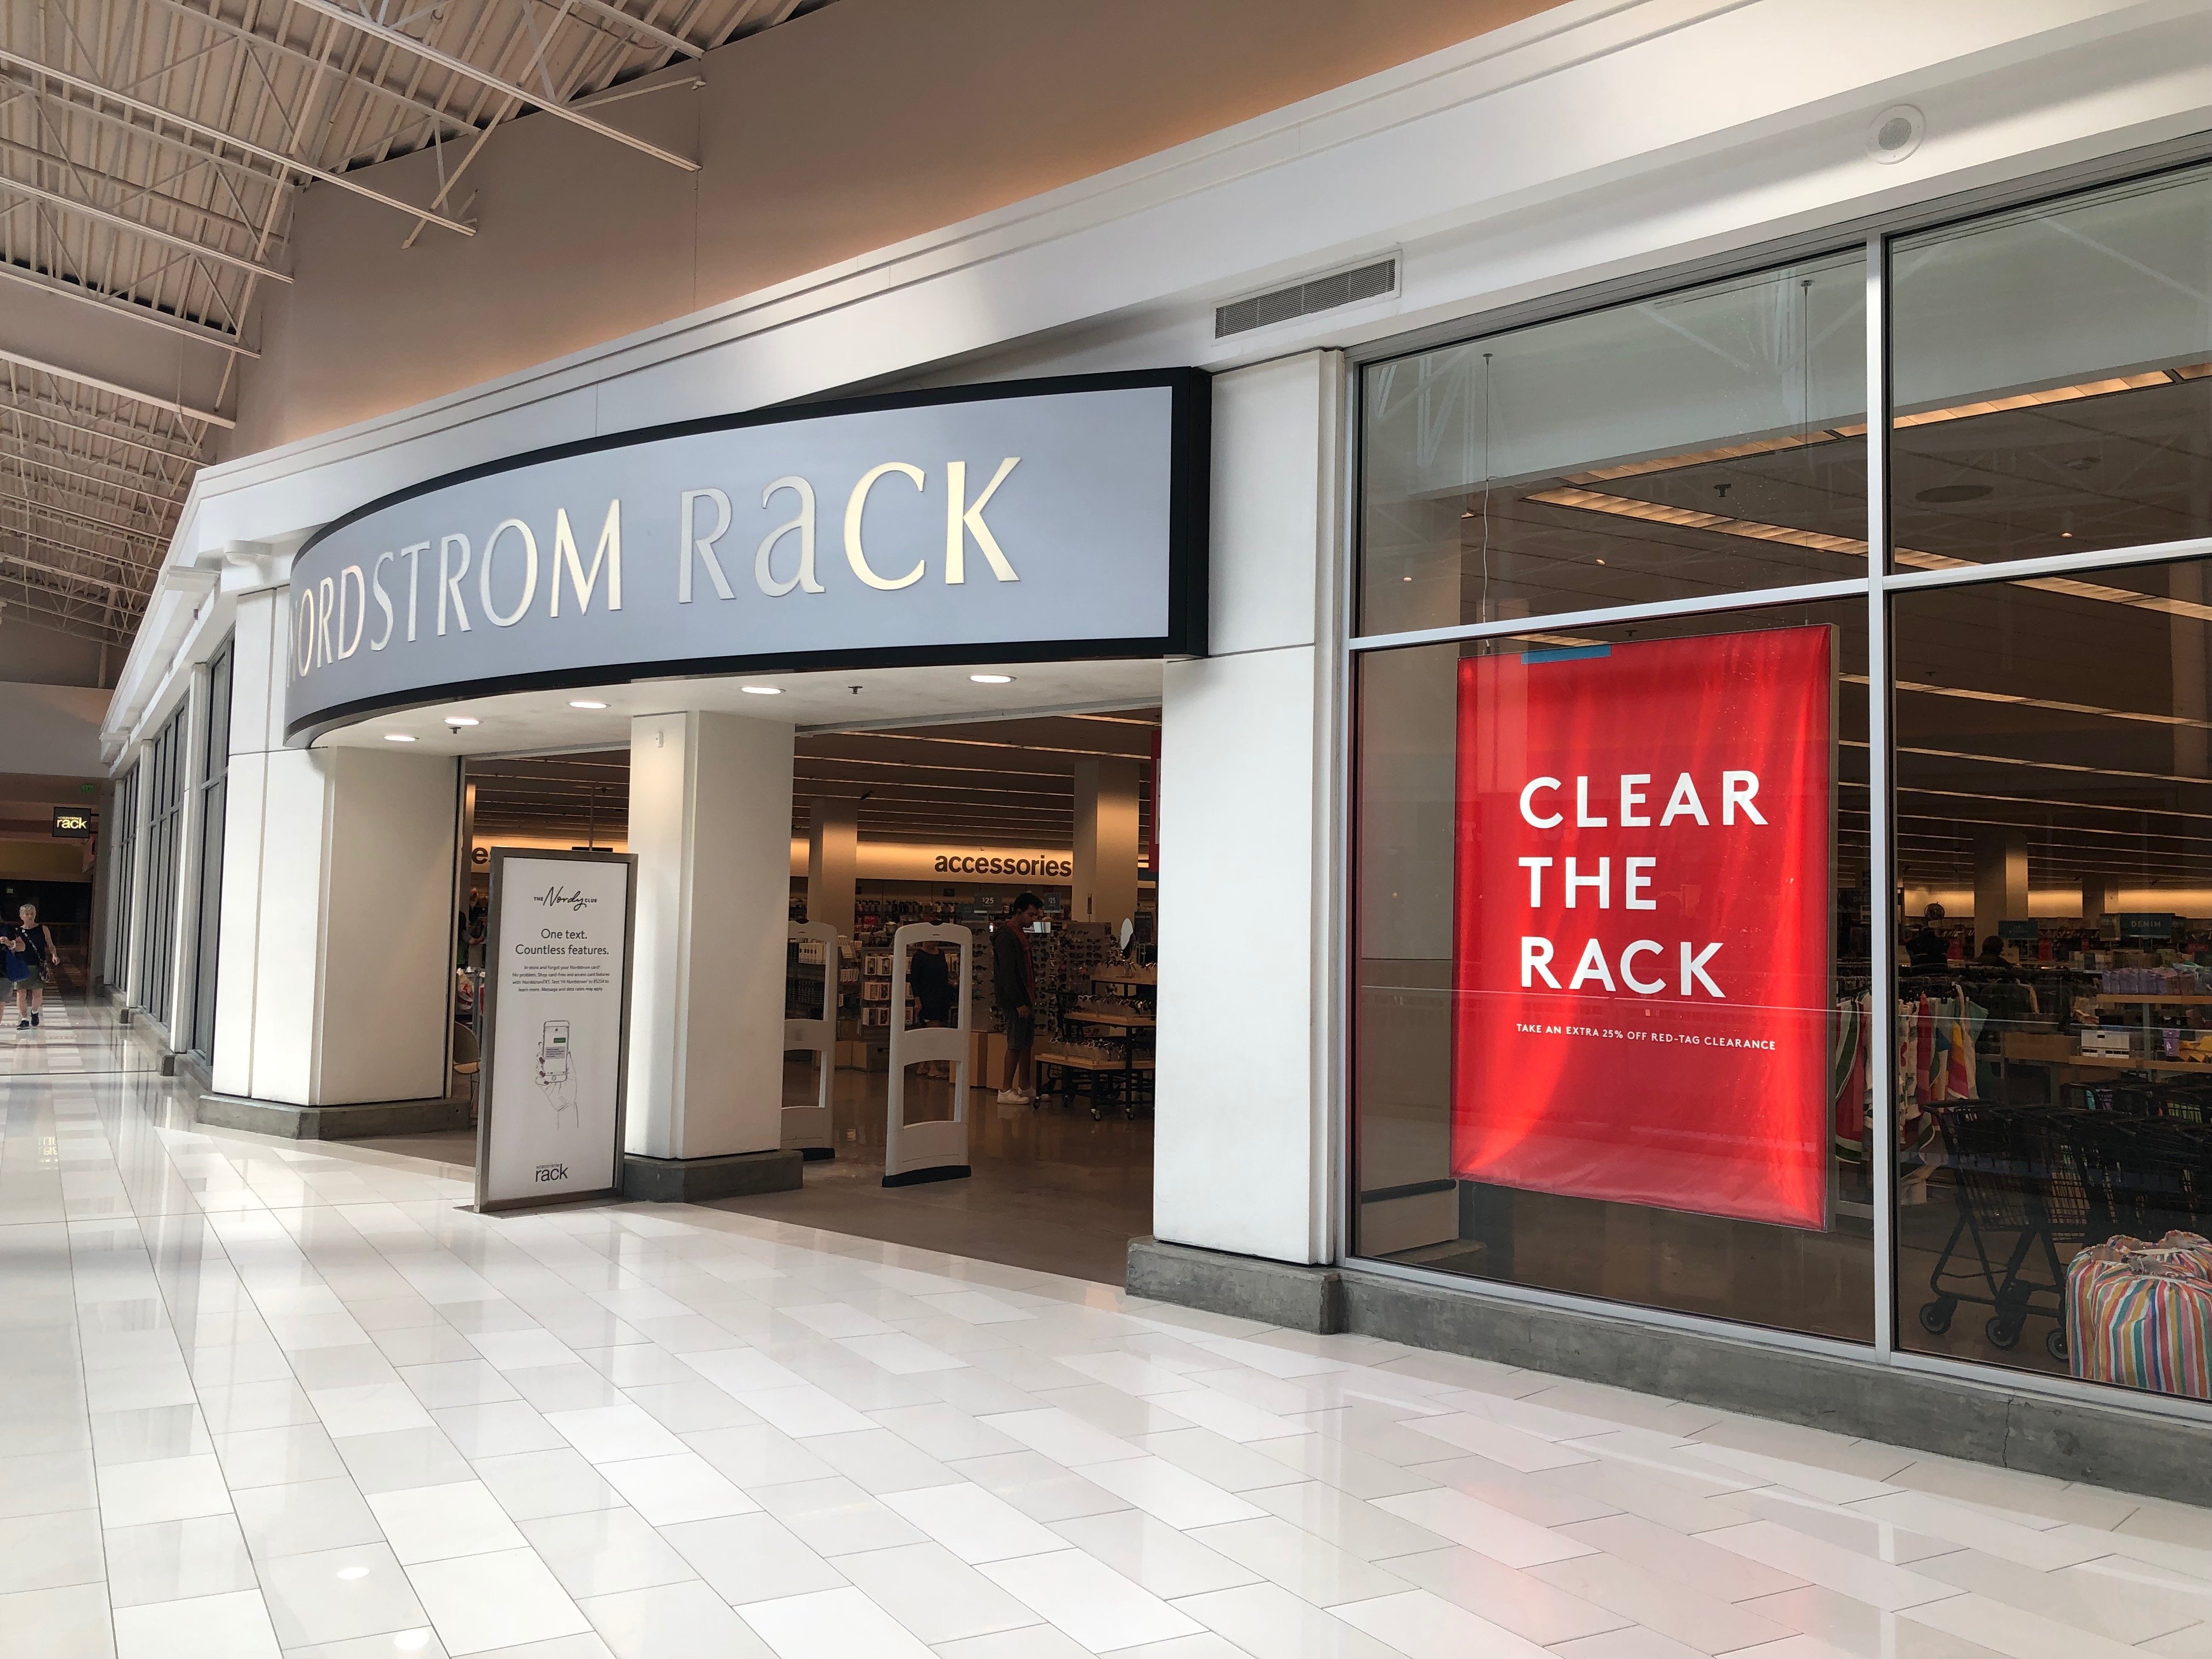 Nordstrom Rack  Mall of America®